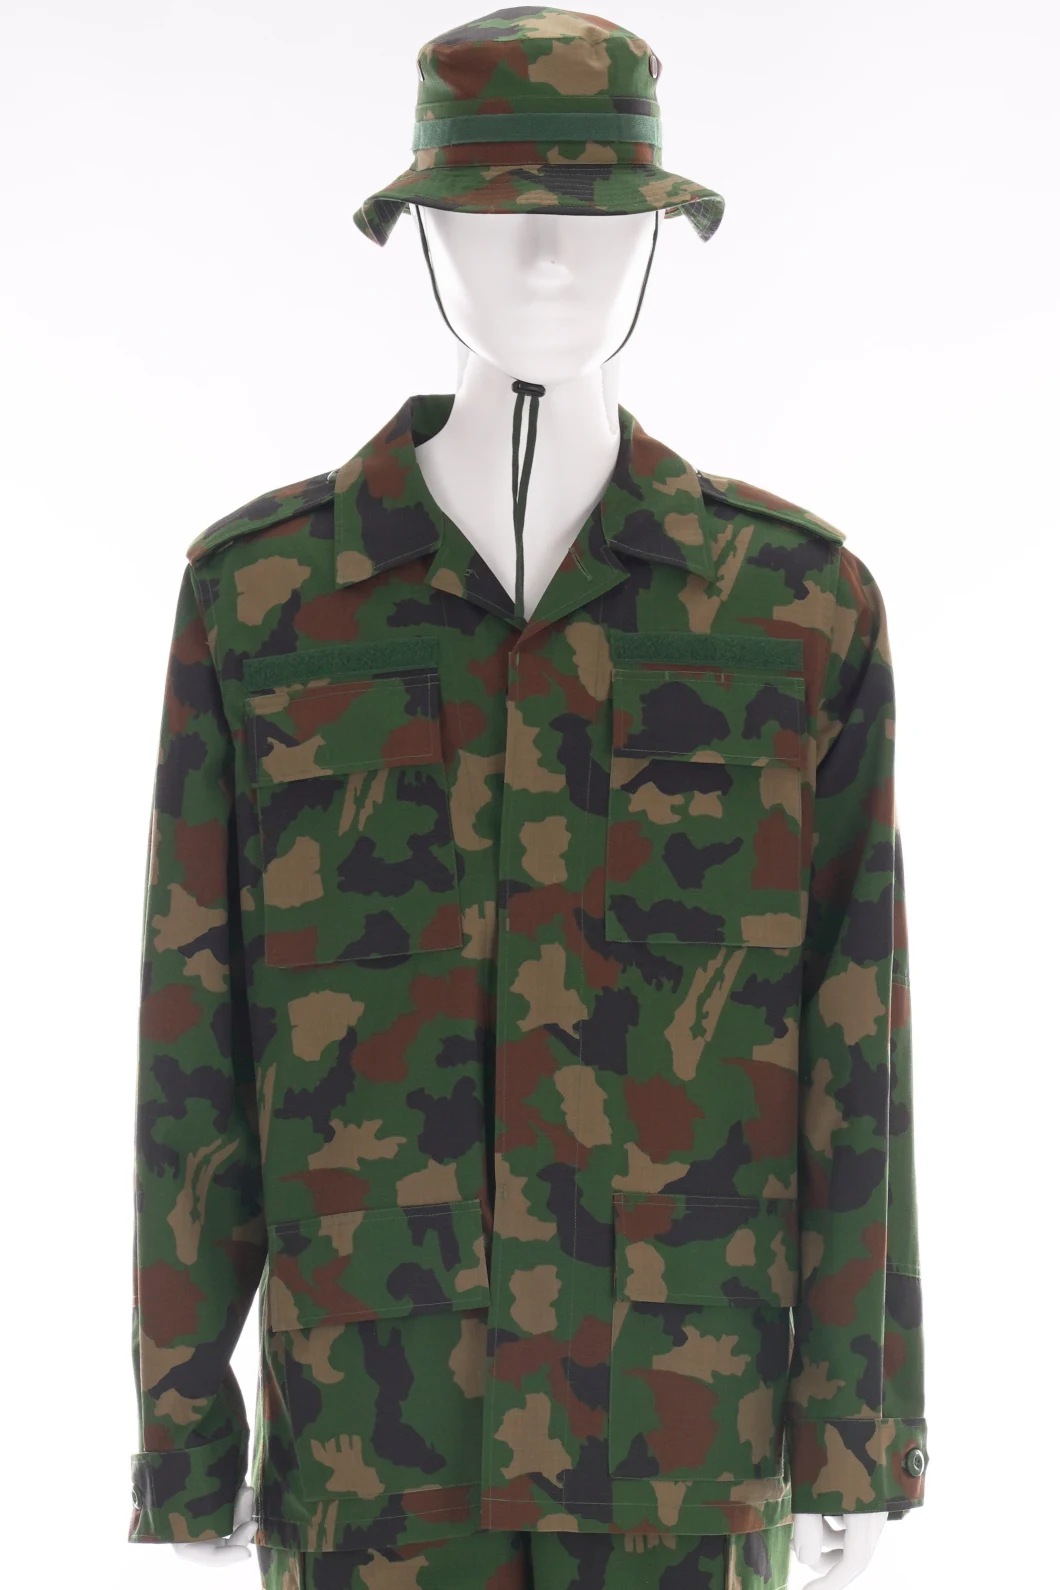 Military Uniform/Bdu/Acu/Army Uniform/Rip-Stop Uniform